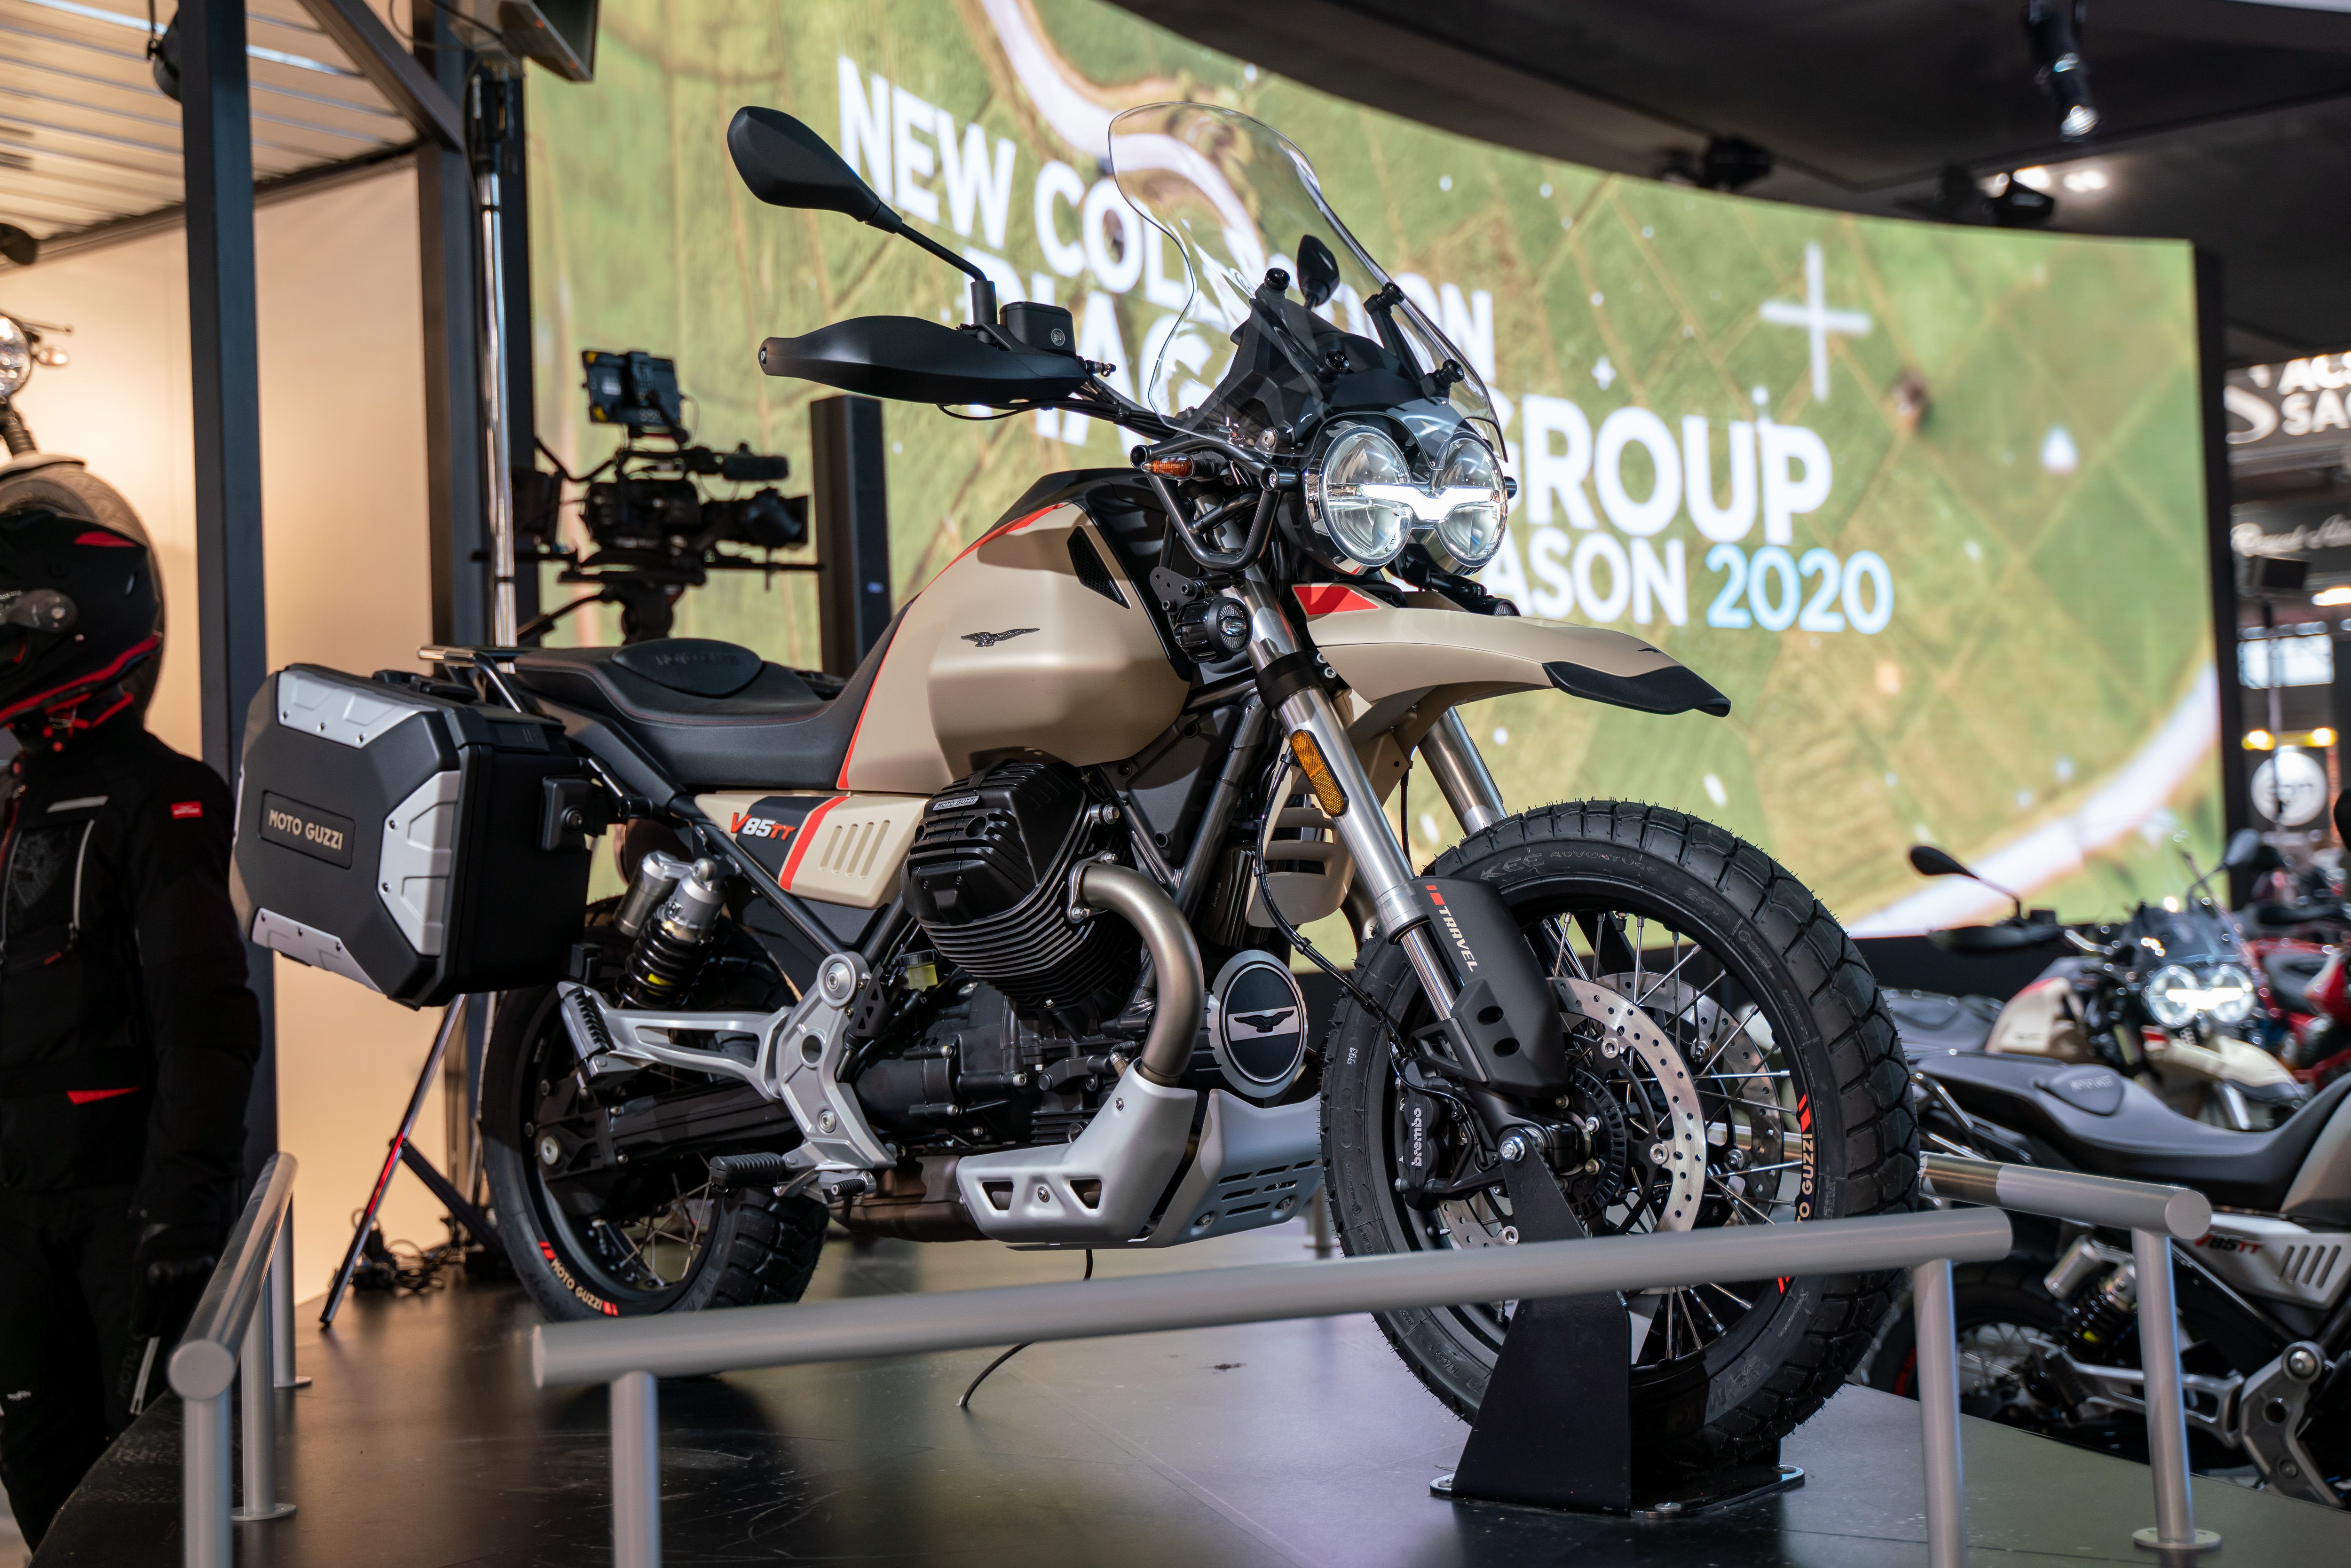 2020 Moto Guzzi V85 TT Travel